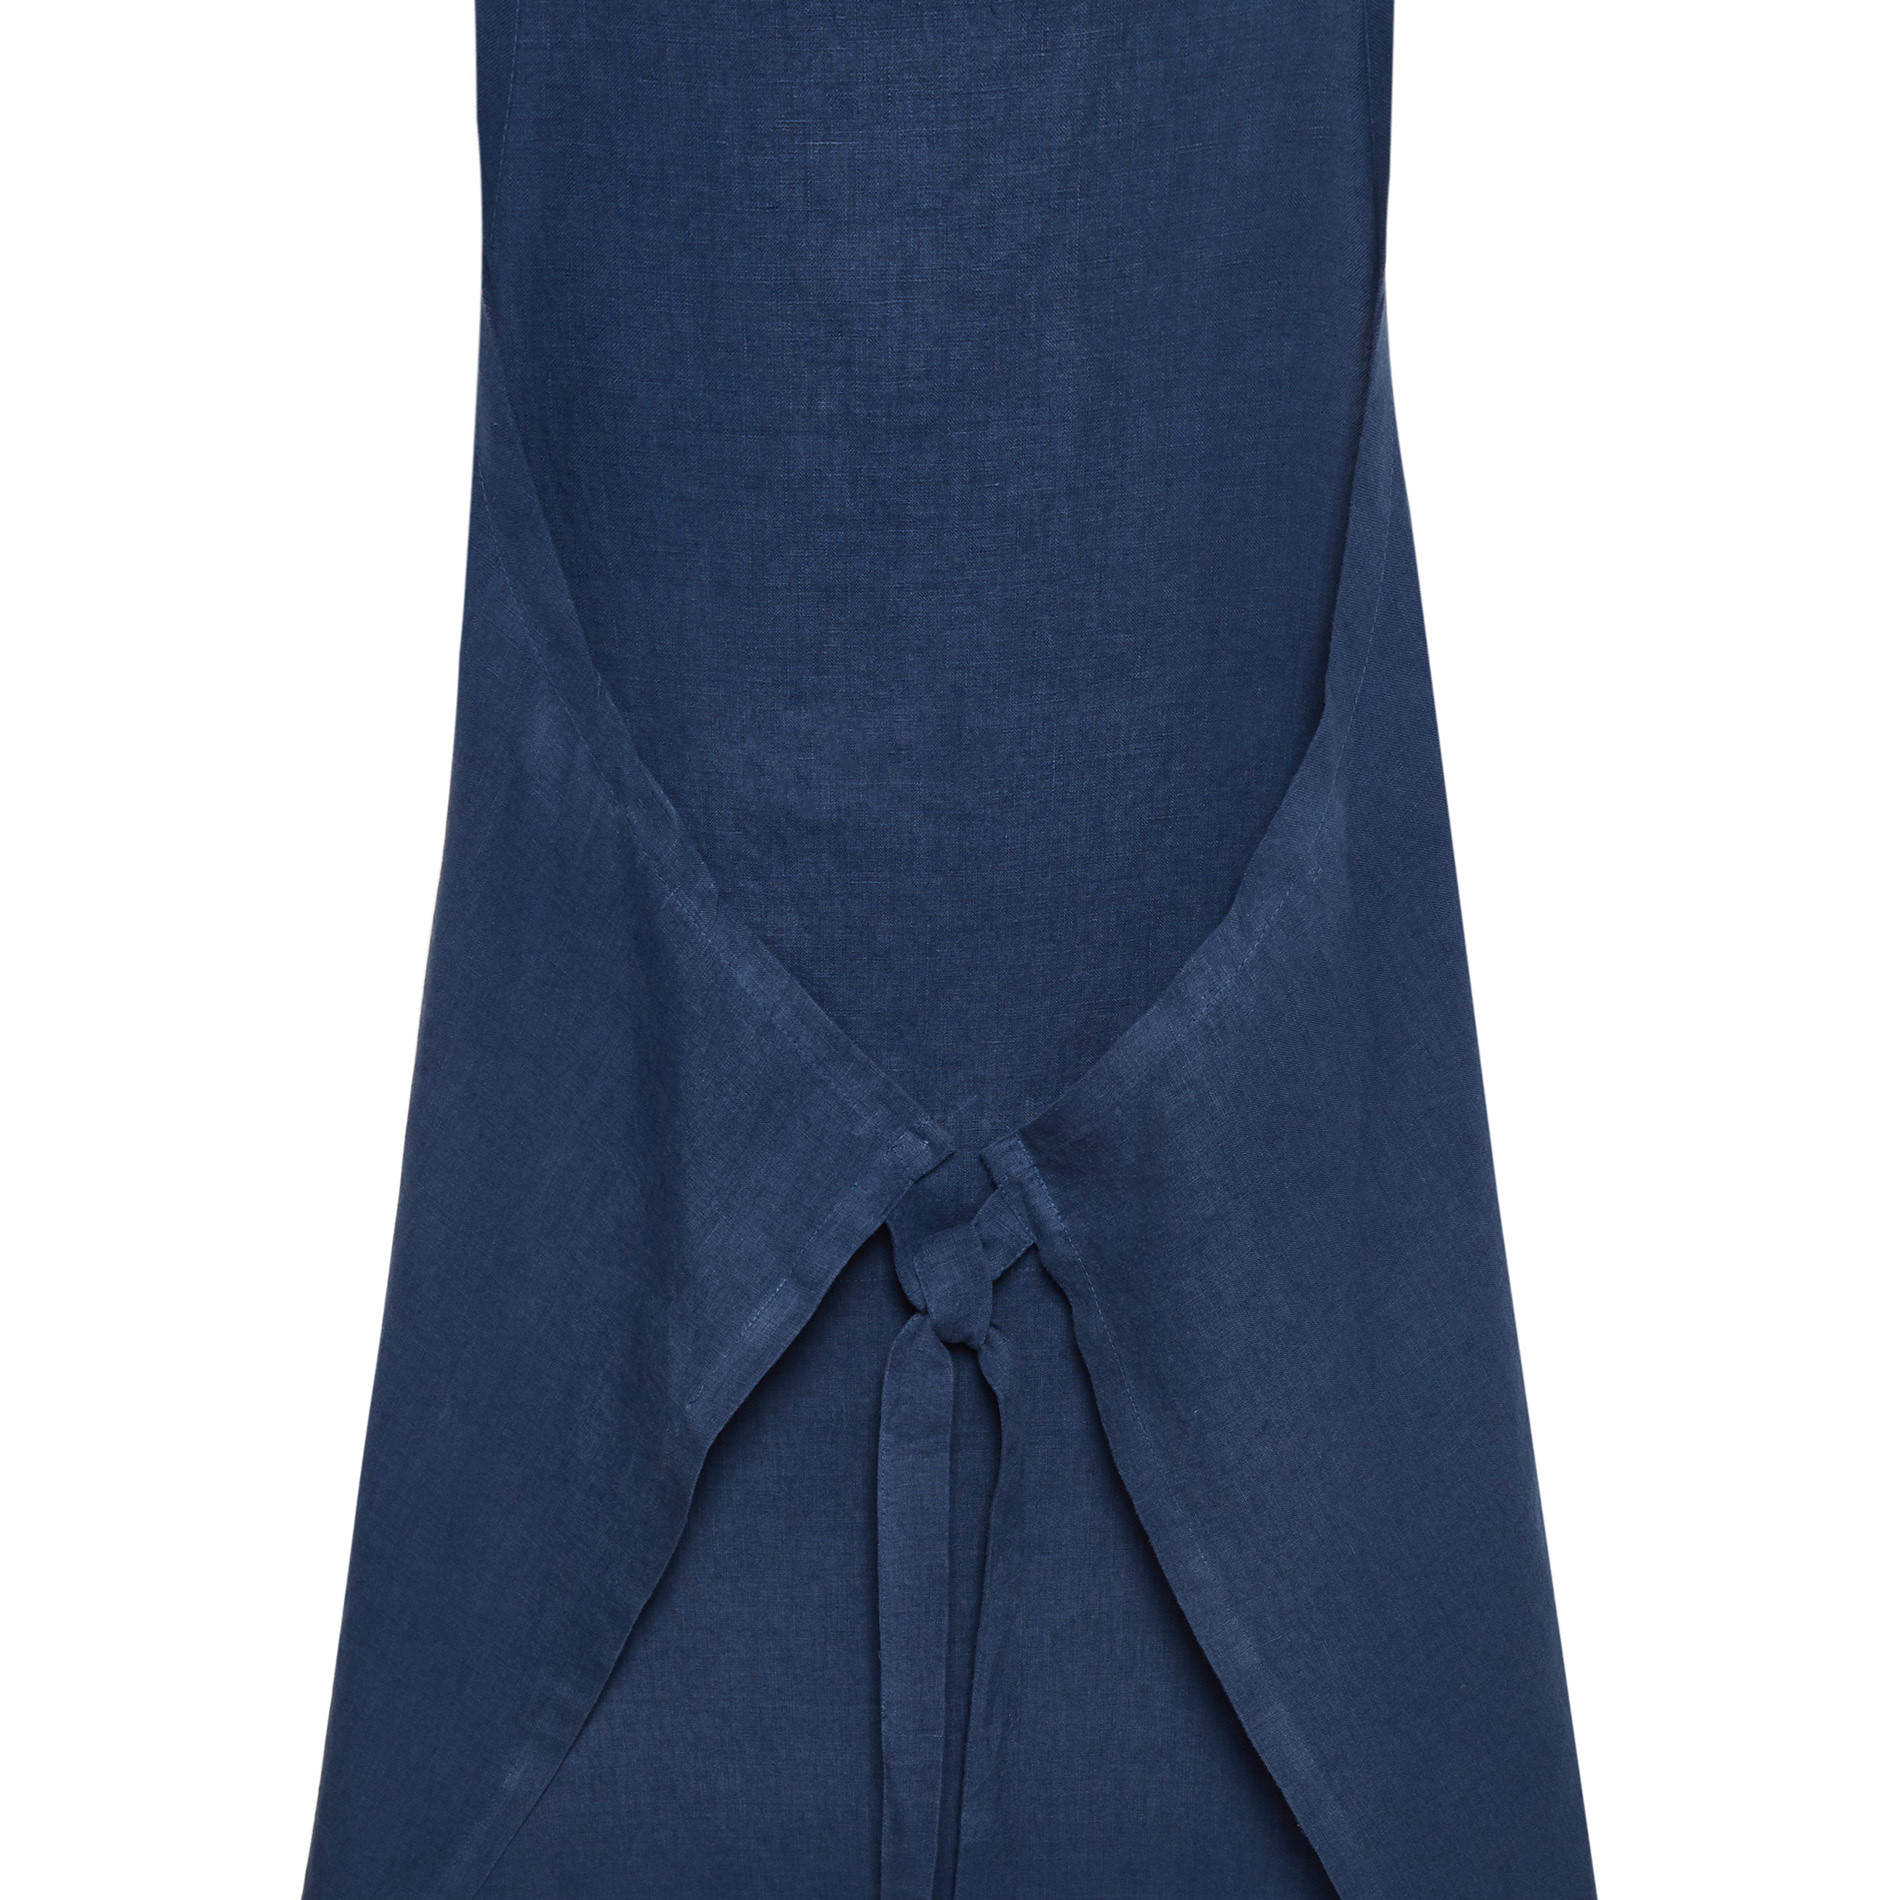 Davide Oldani for Coincasa pure linen apron, Blue, large image number 1